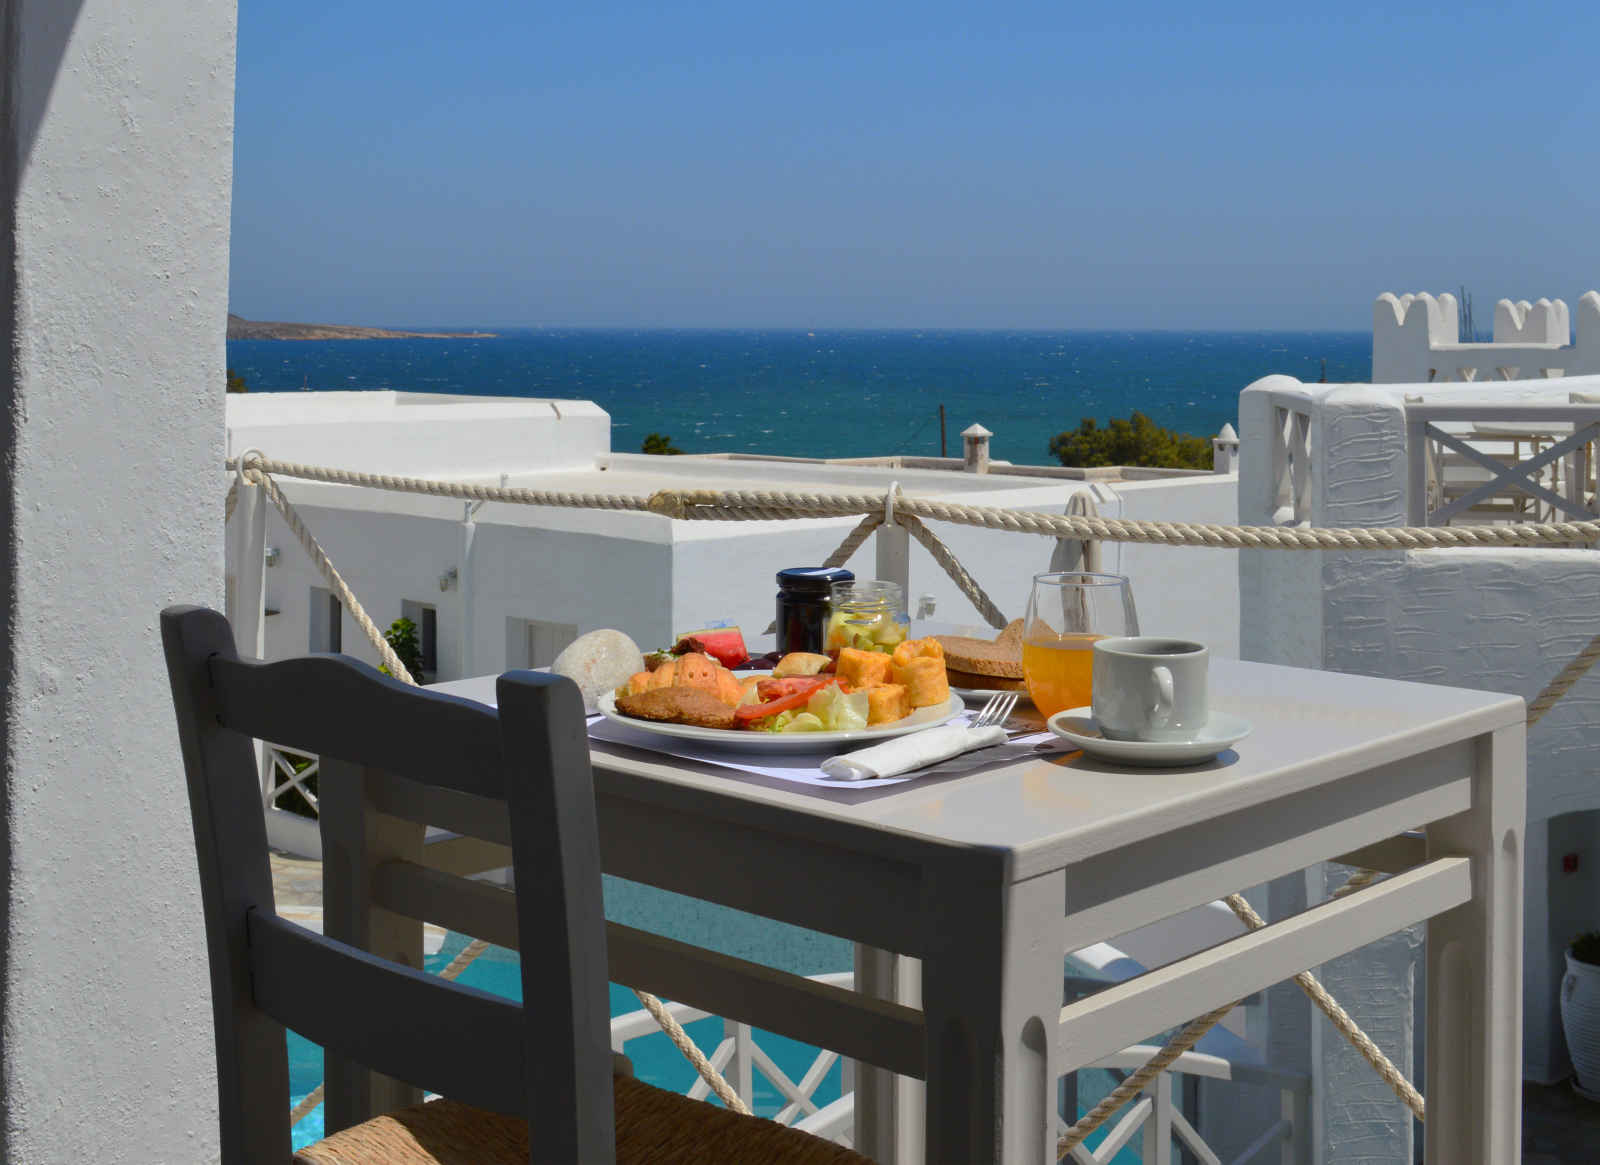 Breakfast vue sur mer, Kanale’s Rooms & Suites, Paros, Grèce